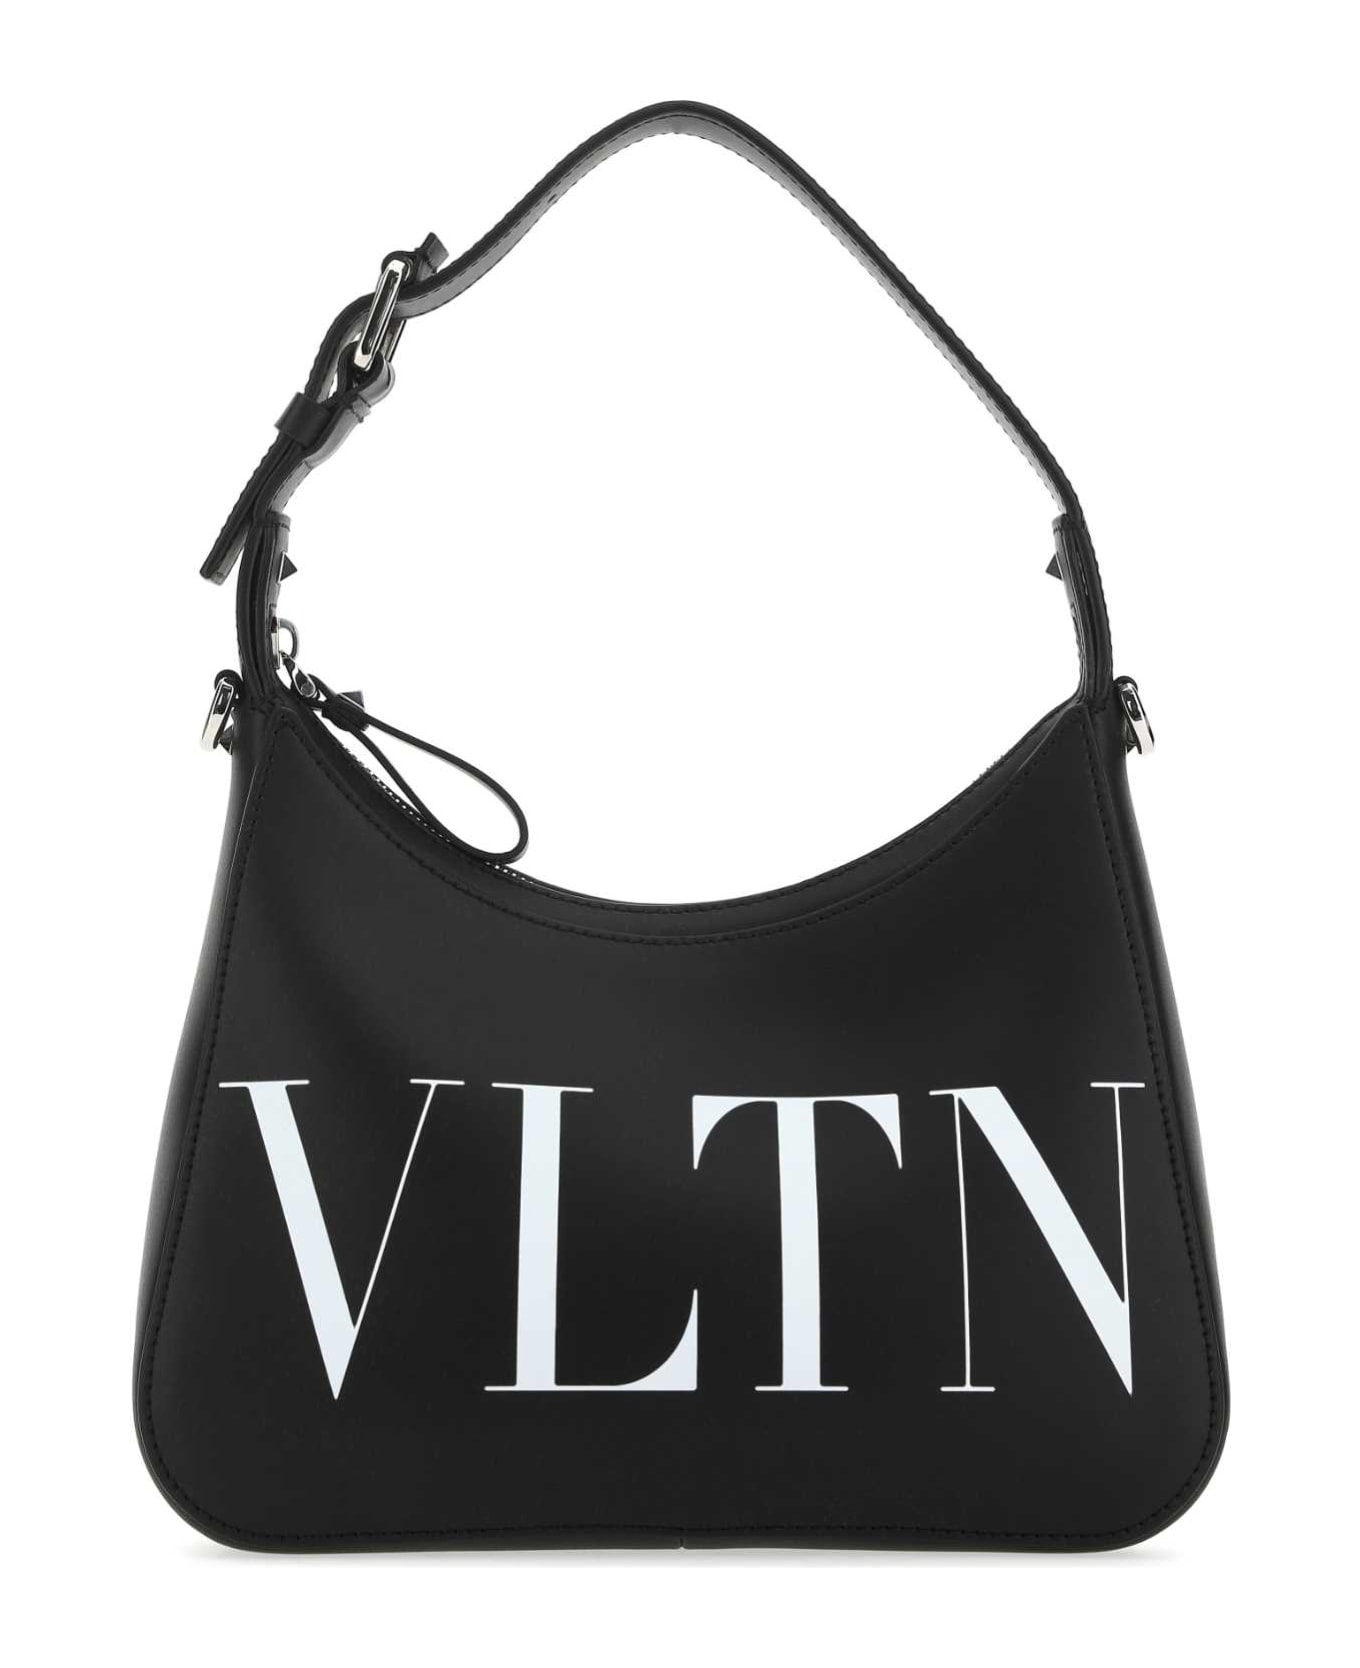 Valentino Garavani Black Leather Vltn Handbag - 0NI